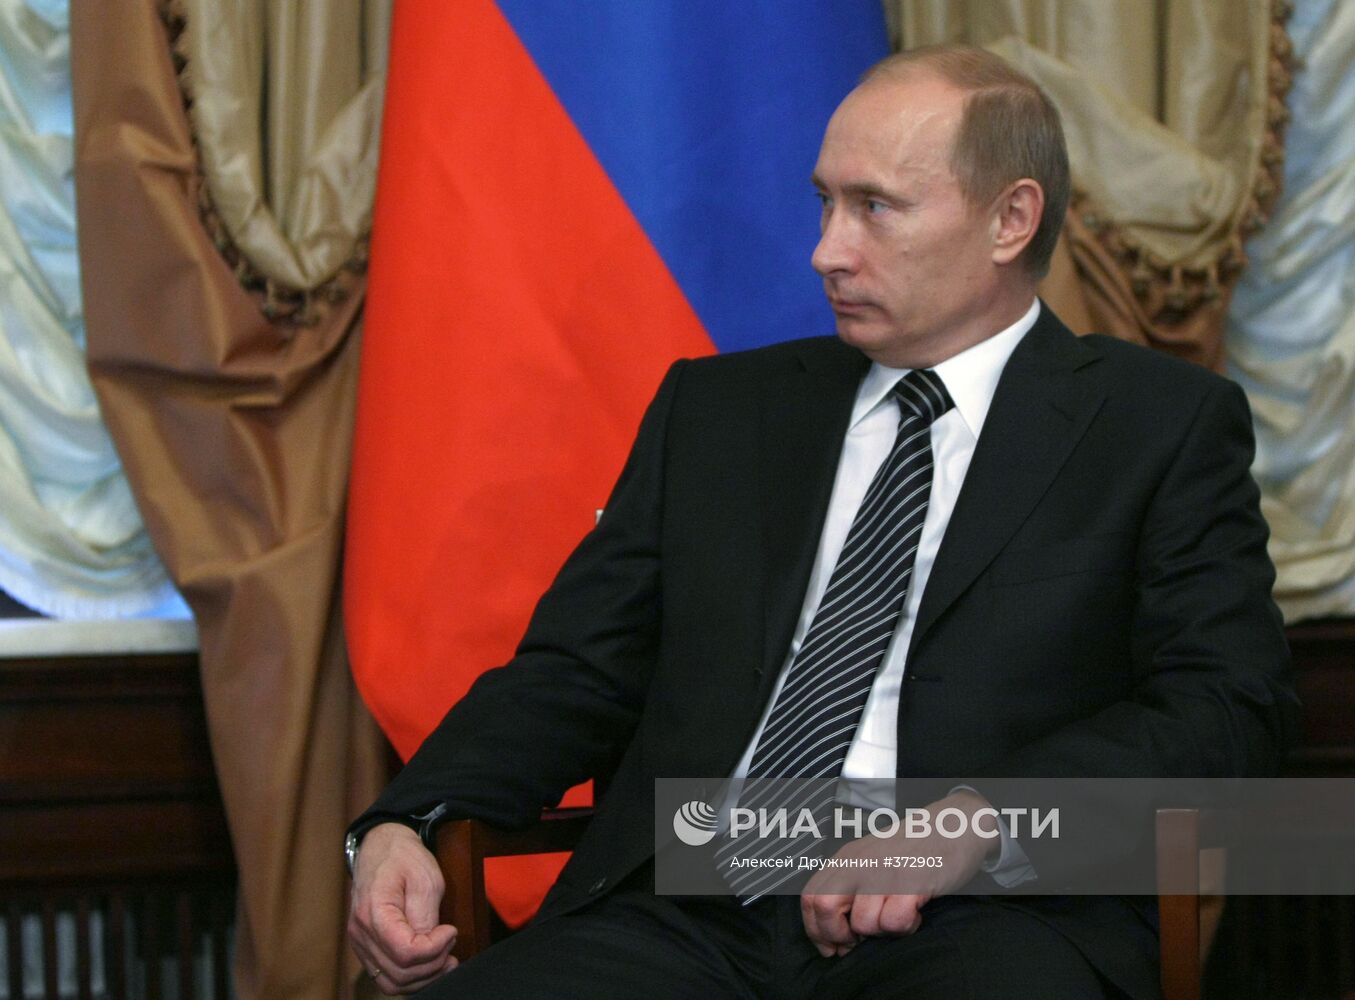 Встреча В. Путина с Ж. М. Баррозу